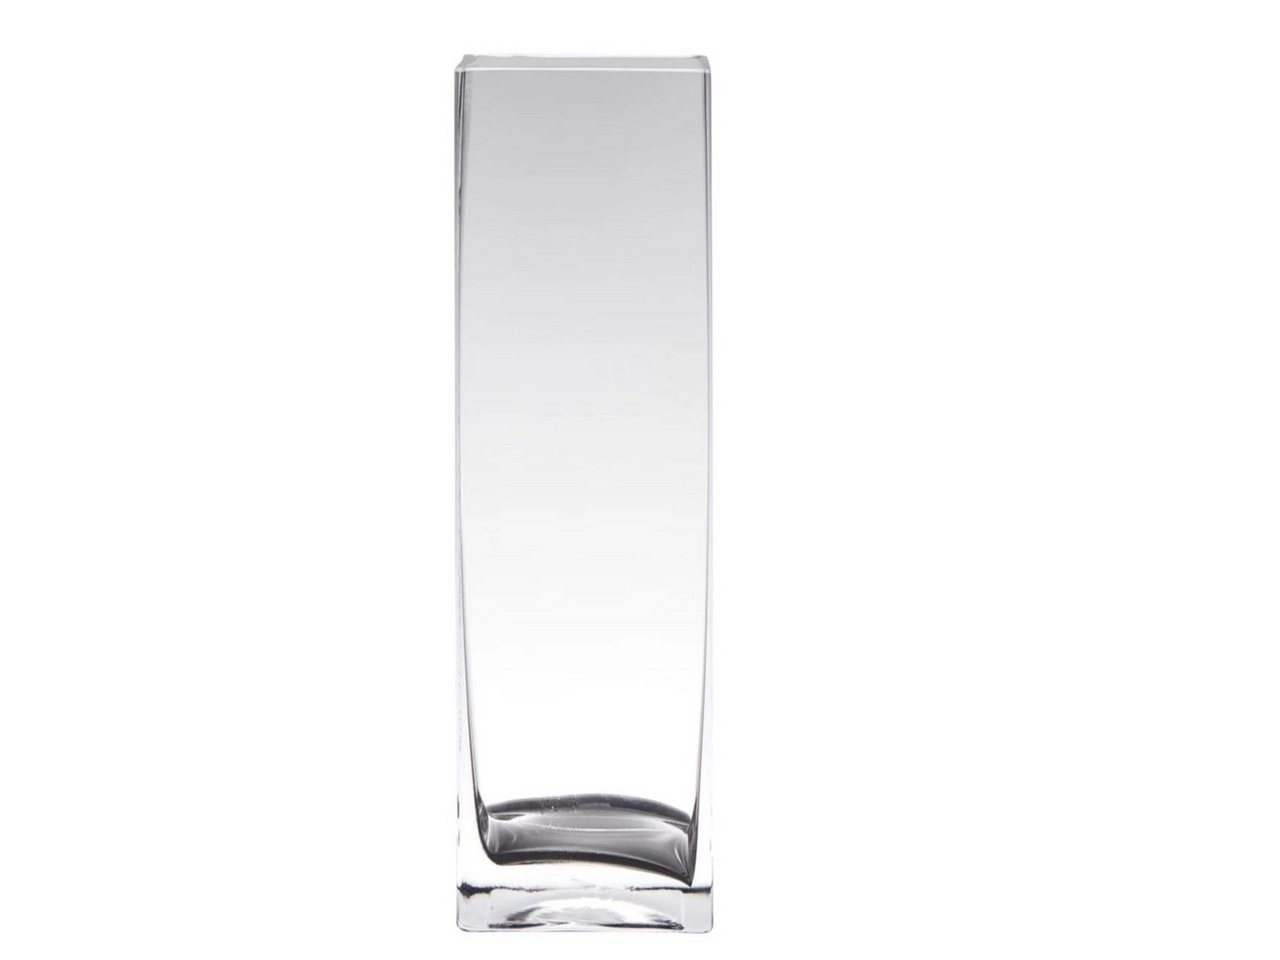 Hakbijl Glass Deko-Glas SQUARE, Transparent L:14cm B:14cm H:50cm Glas von Hakbijl Glass